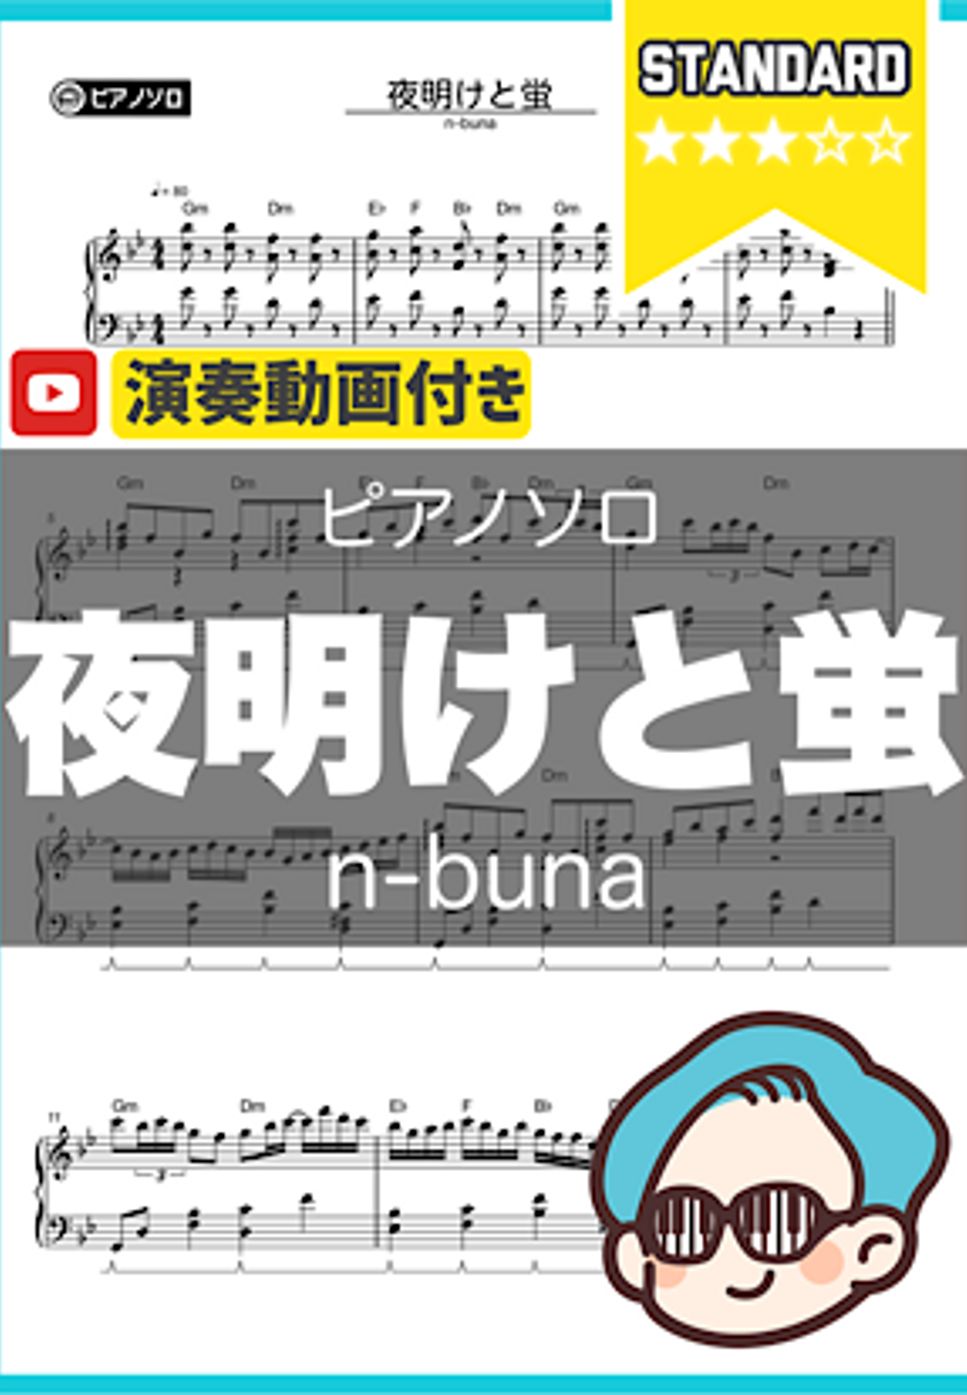 n-buna - 夜明けと蛍 by シータピアノ